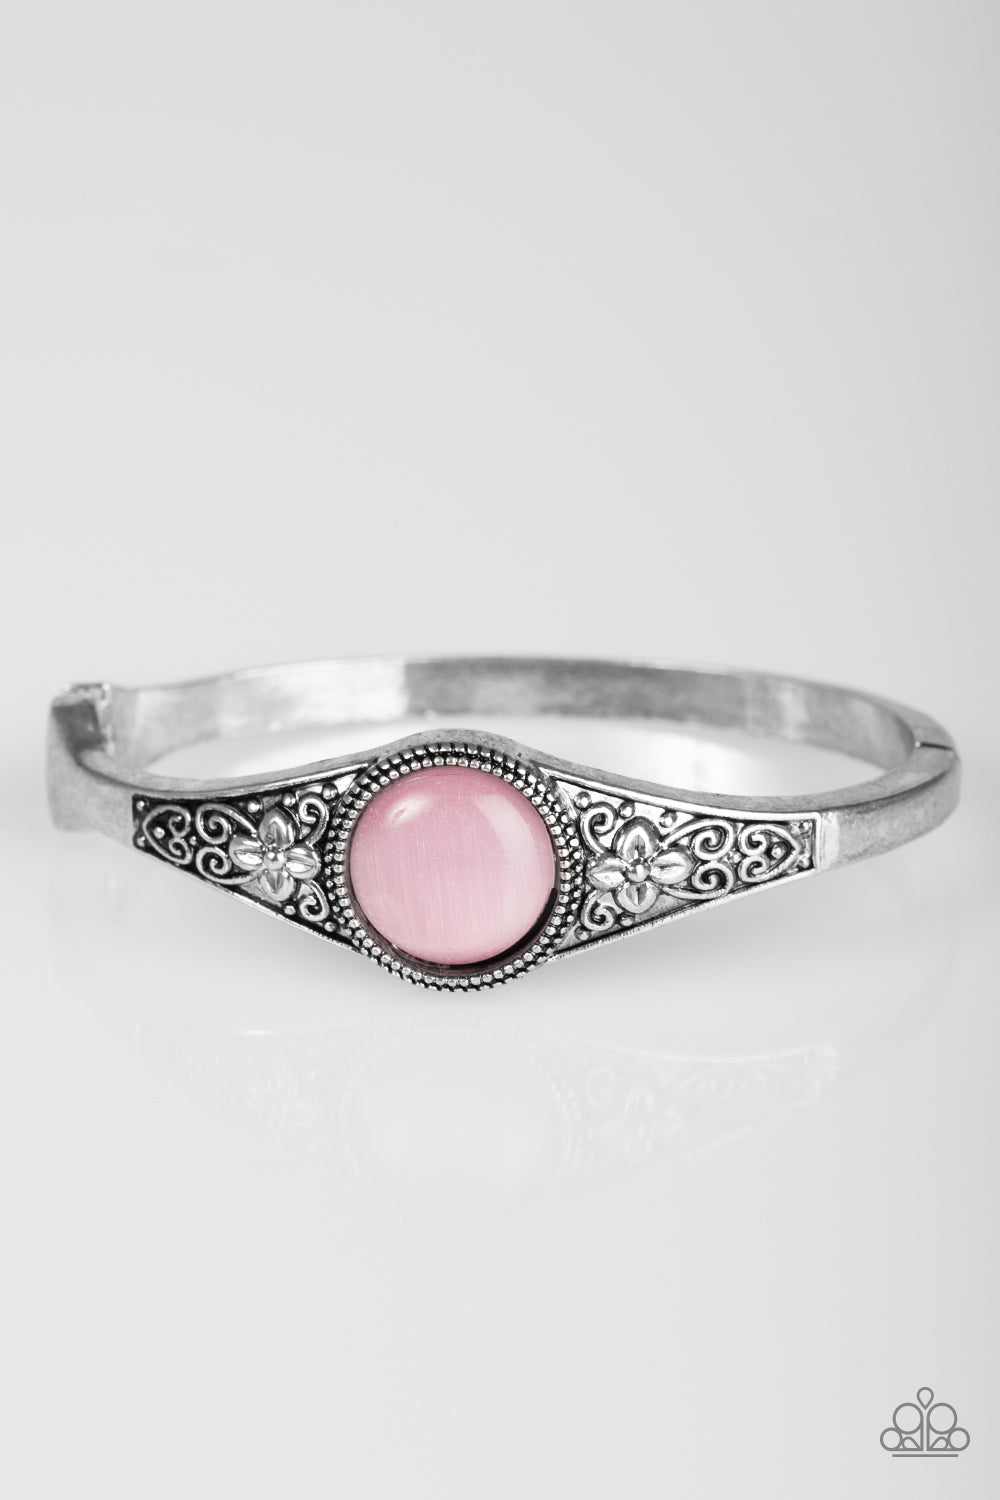 Modernly Meadow Pink Paparazzi Bracelet Cashmere Pink Jewels - Cashmere Pink Jewels & Accessories, Cashmere Pink Jewels & Accessories - Paparazzi